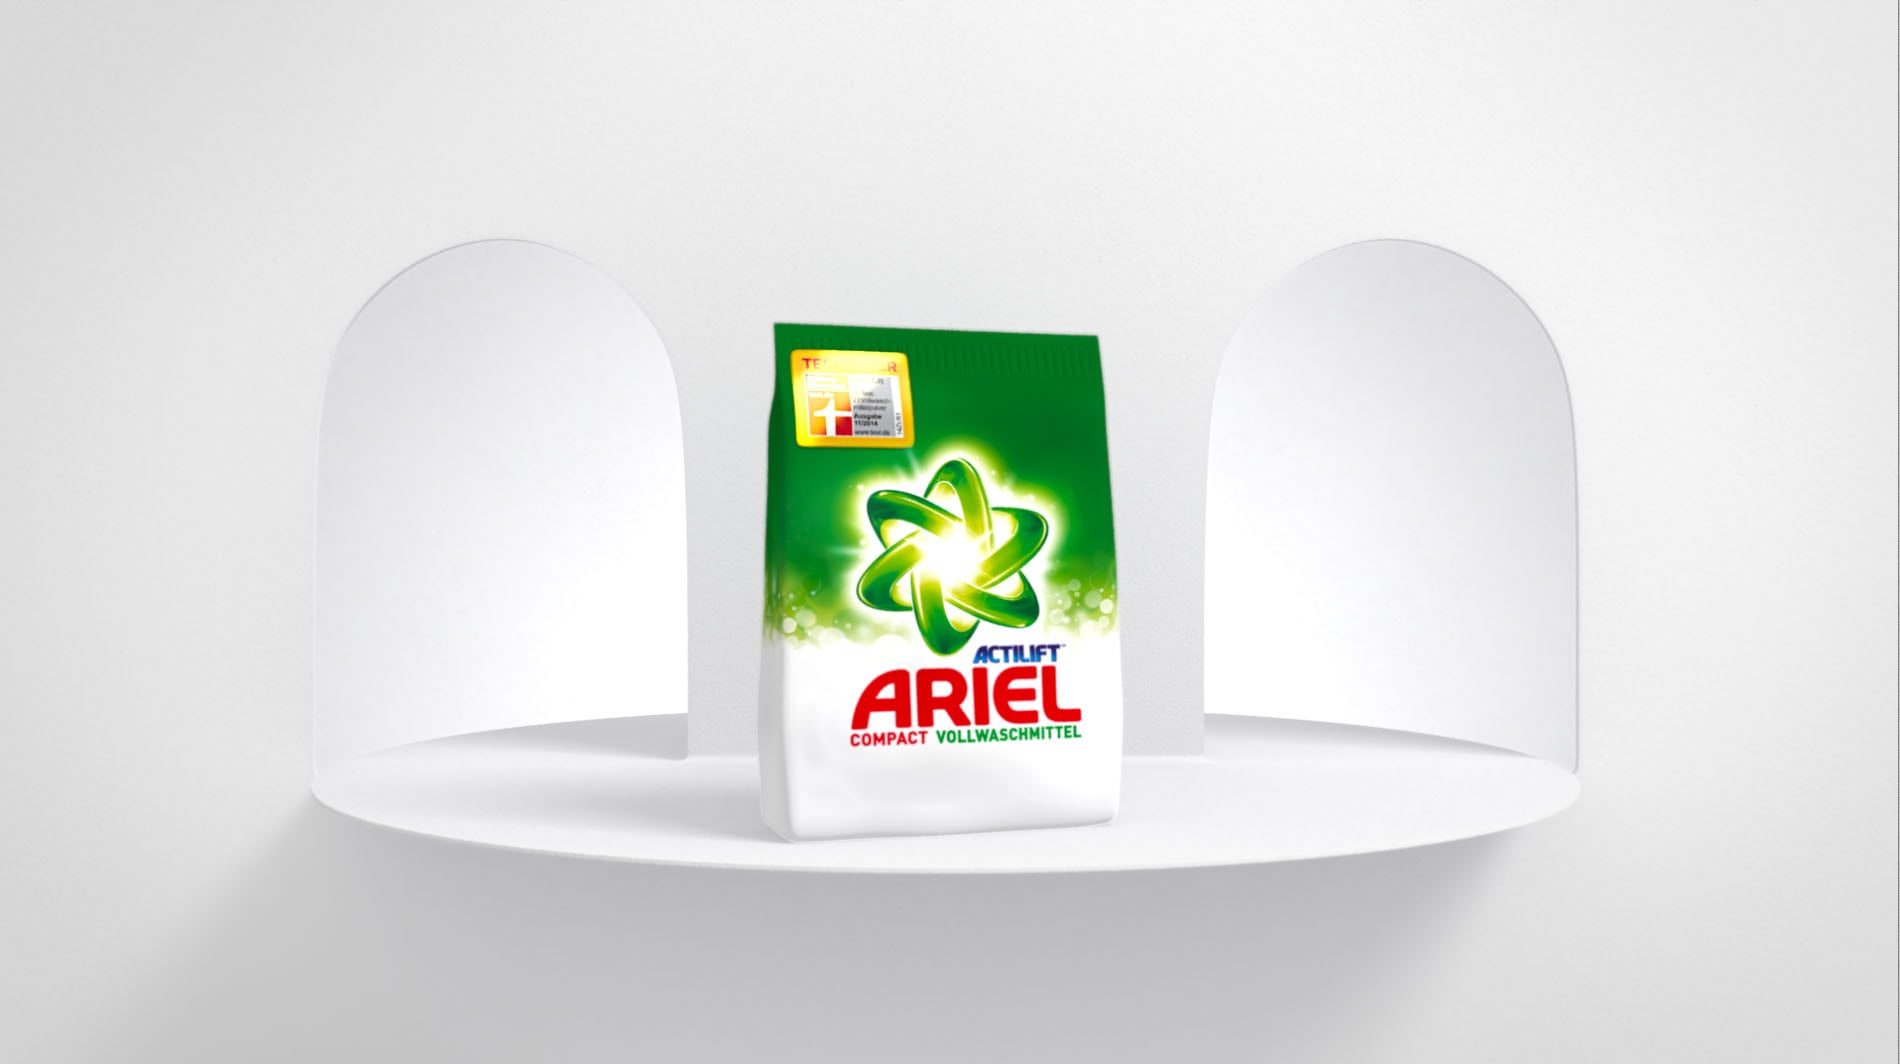 ARIEL RTL Wetter Sponsoring - by Screencraft 